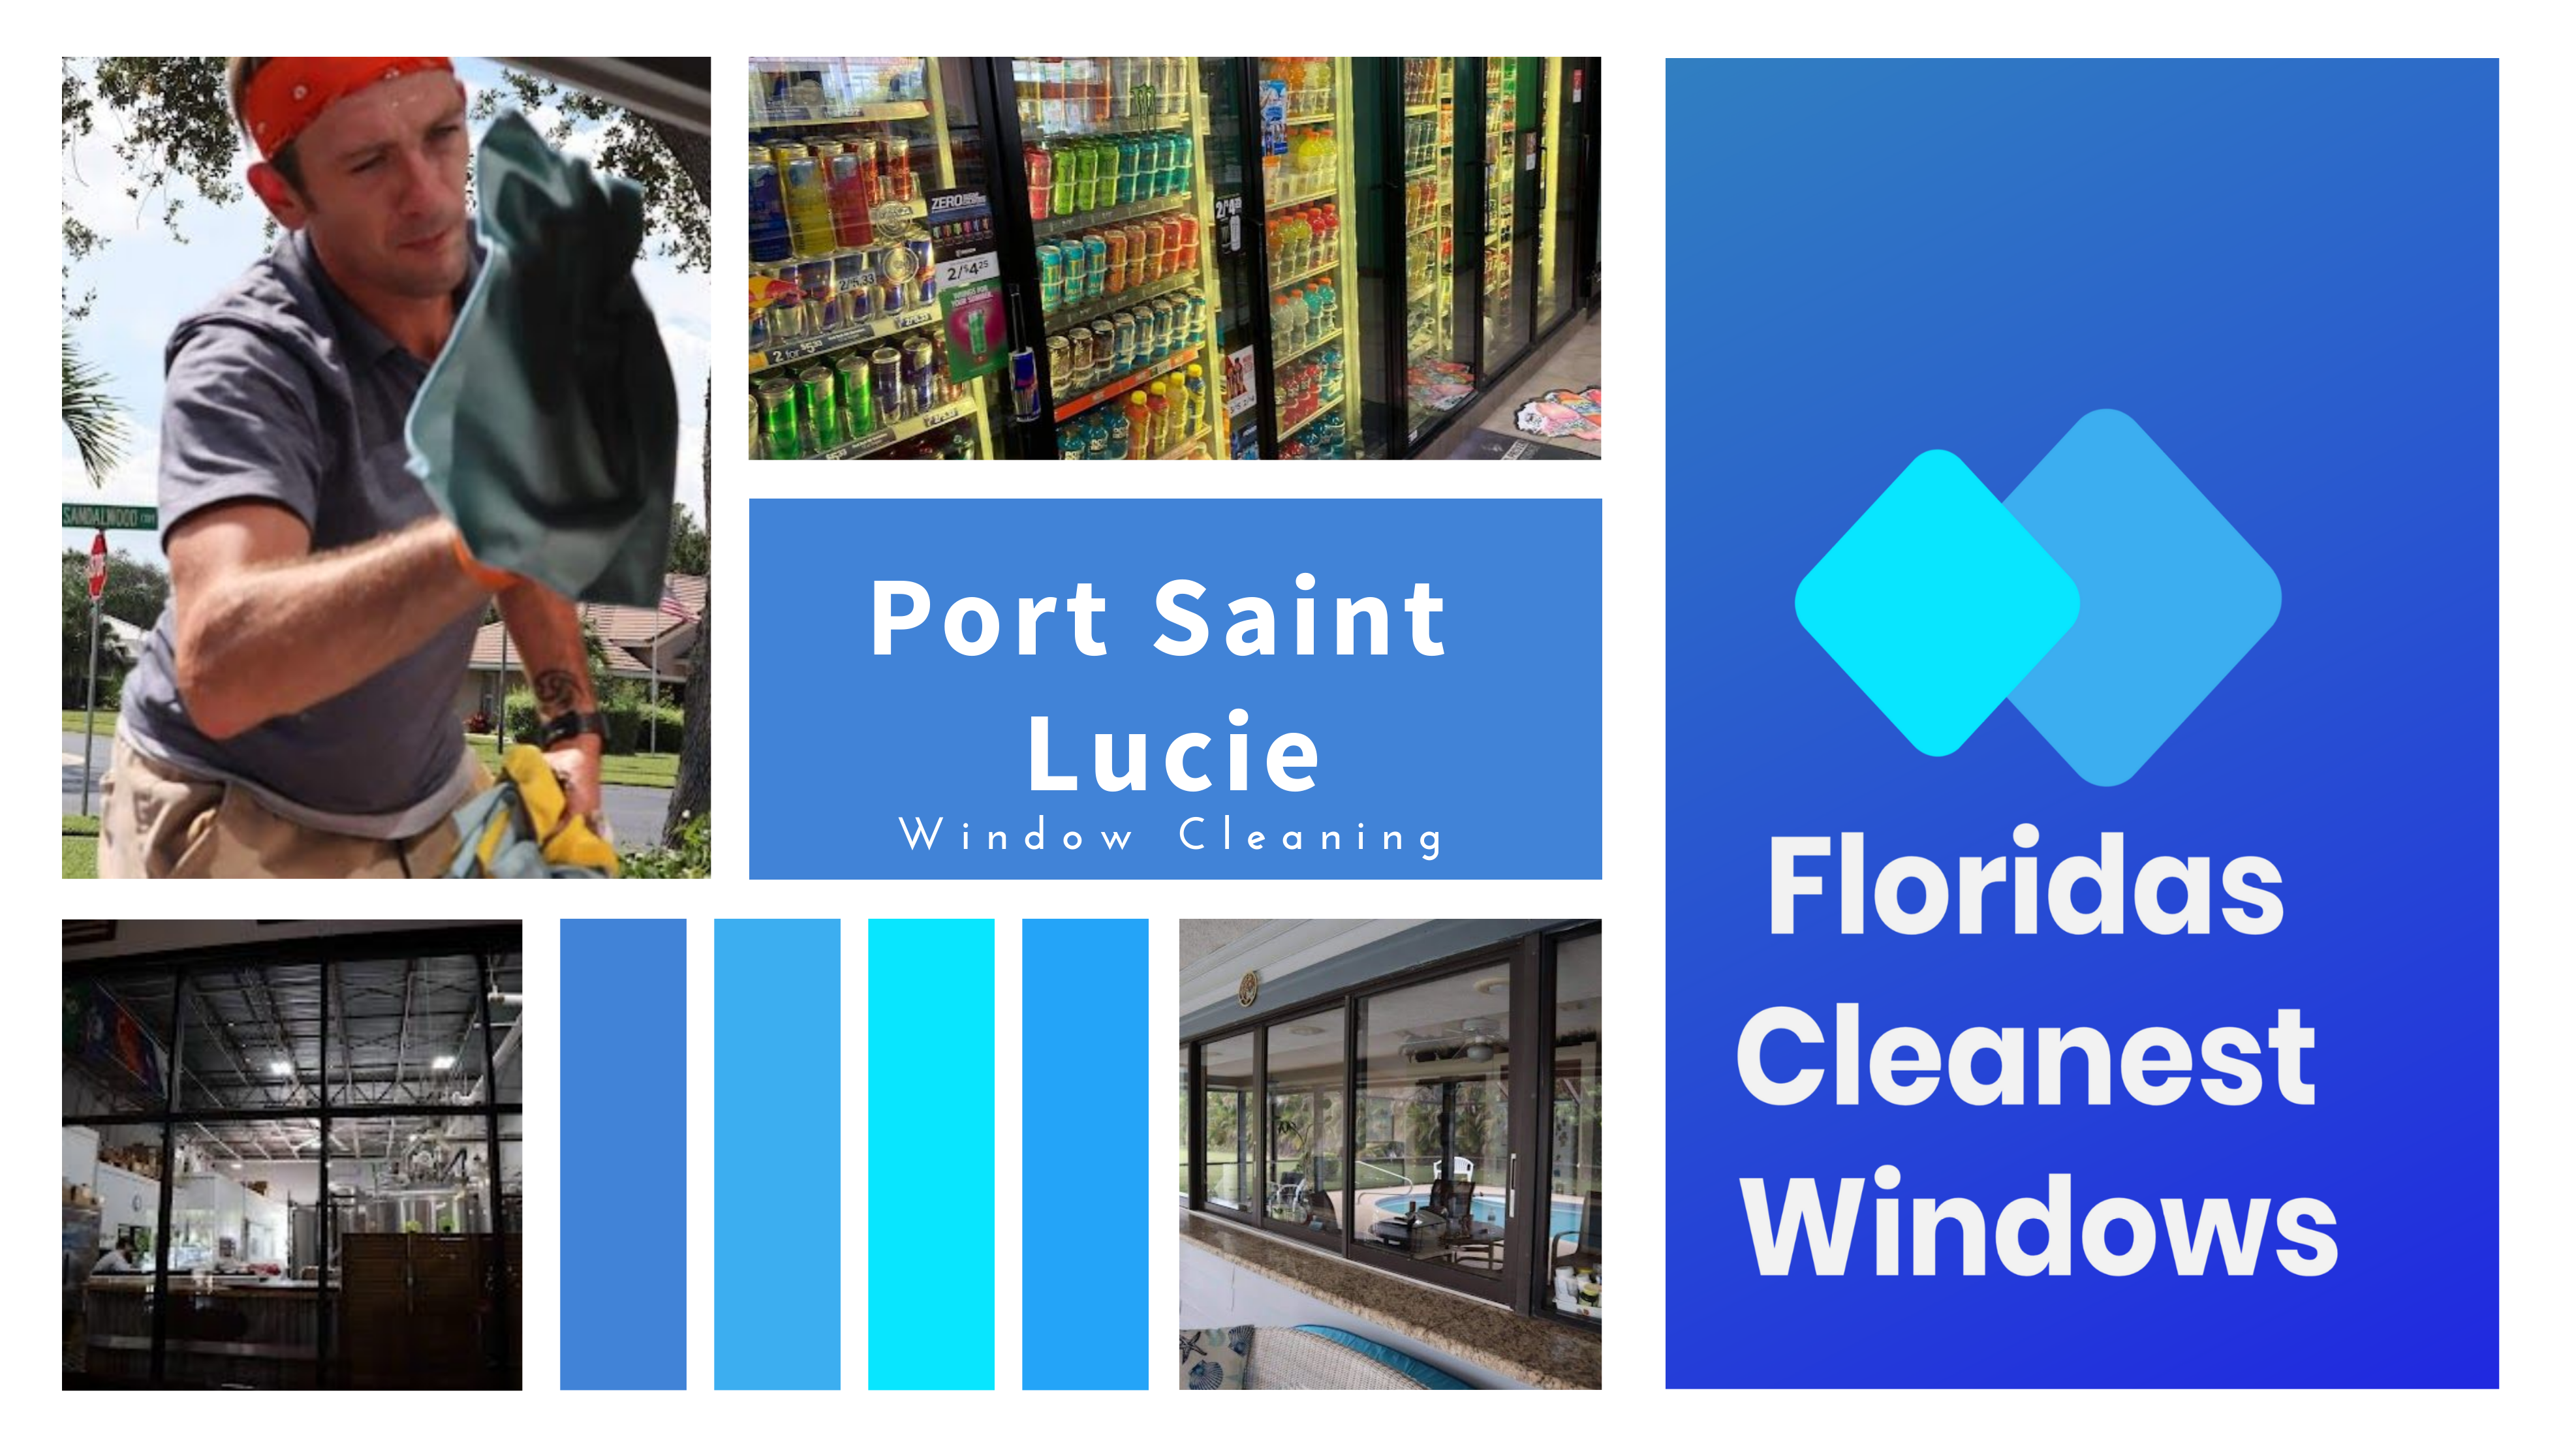 Floridas Cleanest Windows